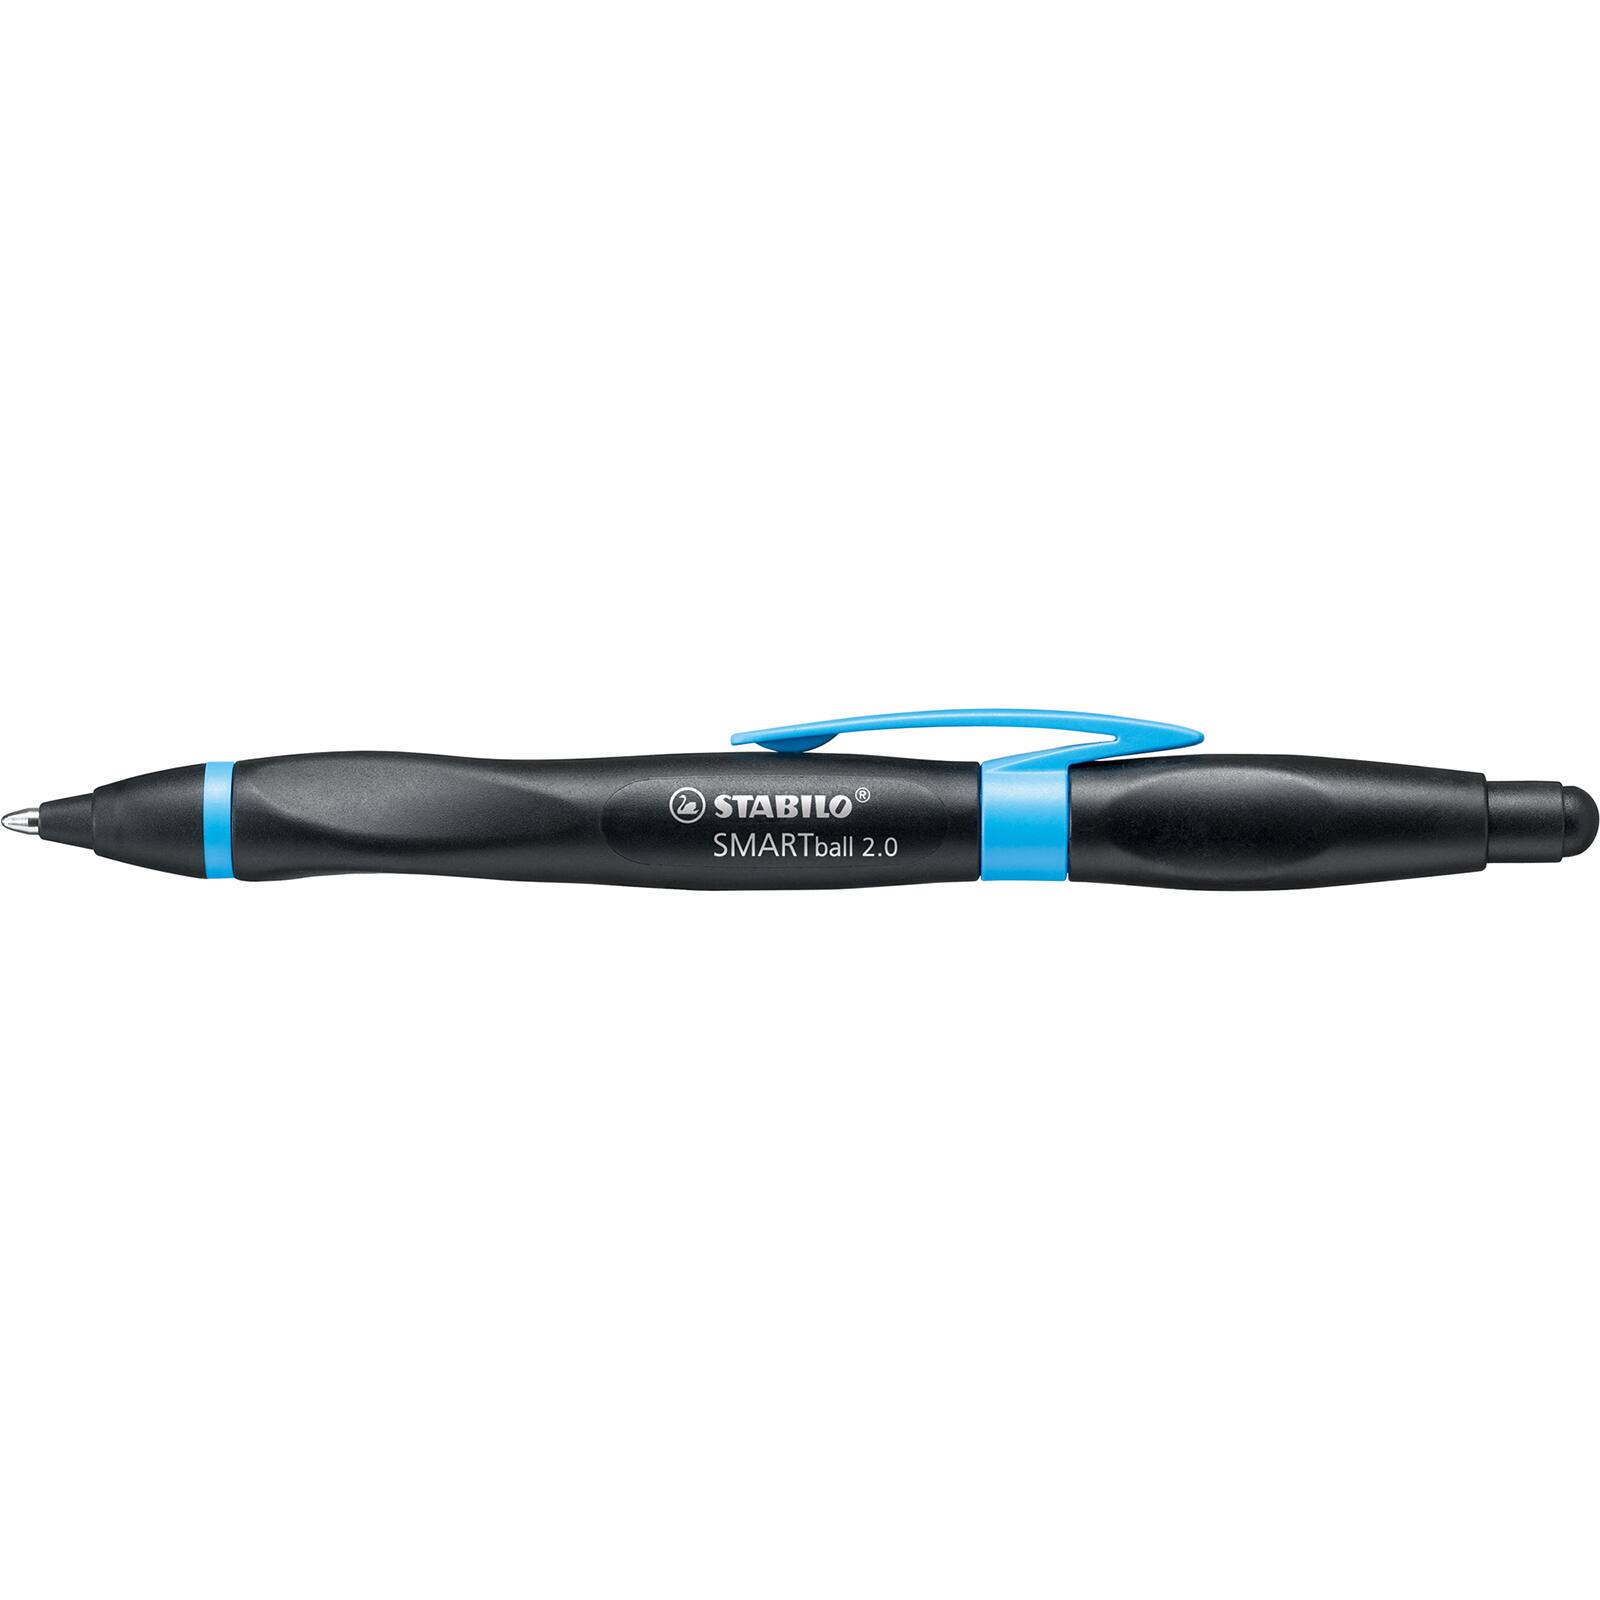 Groot Razernij Editor Stabilo® SMARTball 2.0 Pens, Right Handed | Michaels